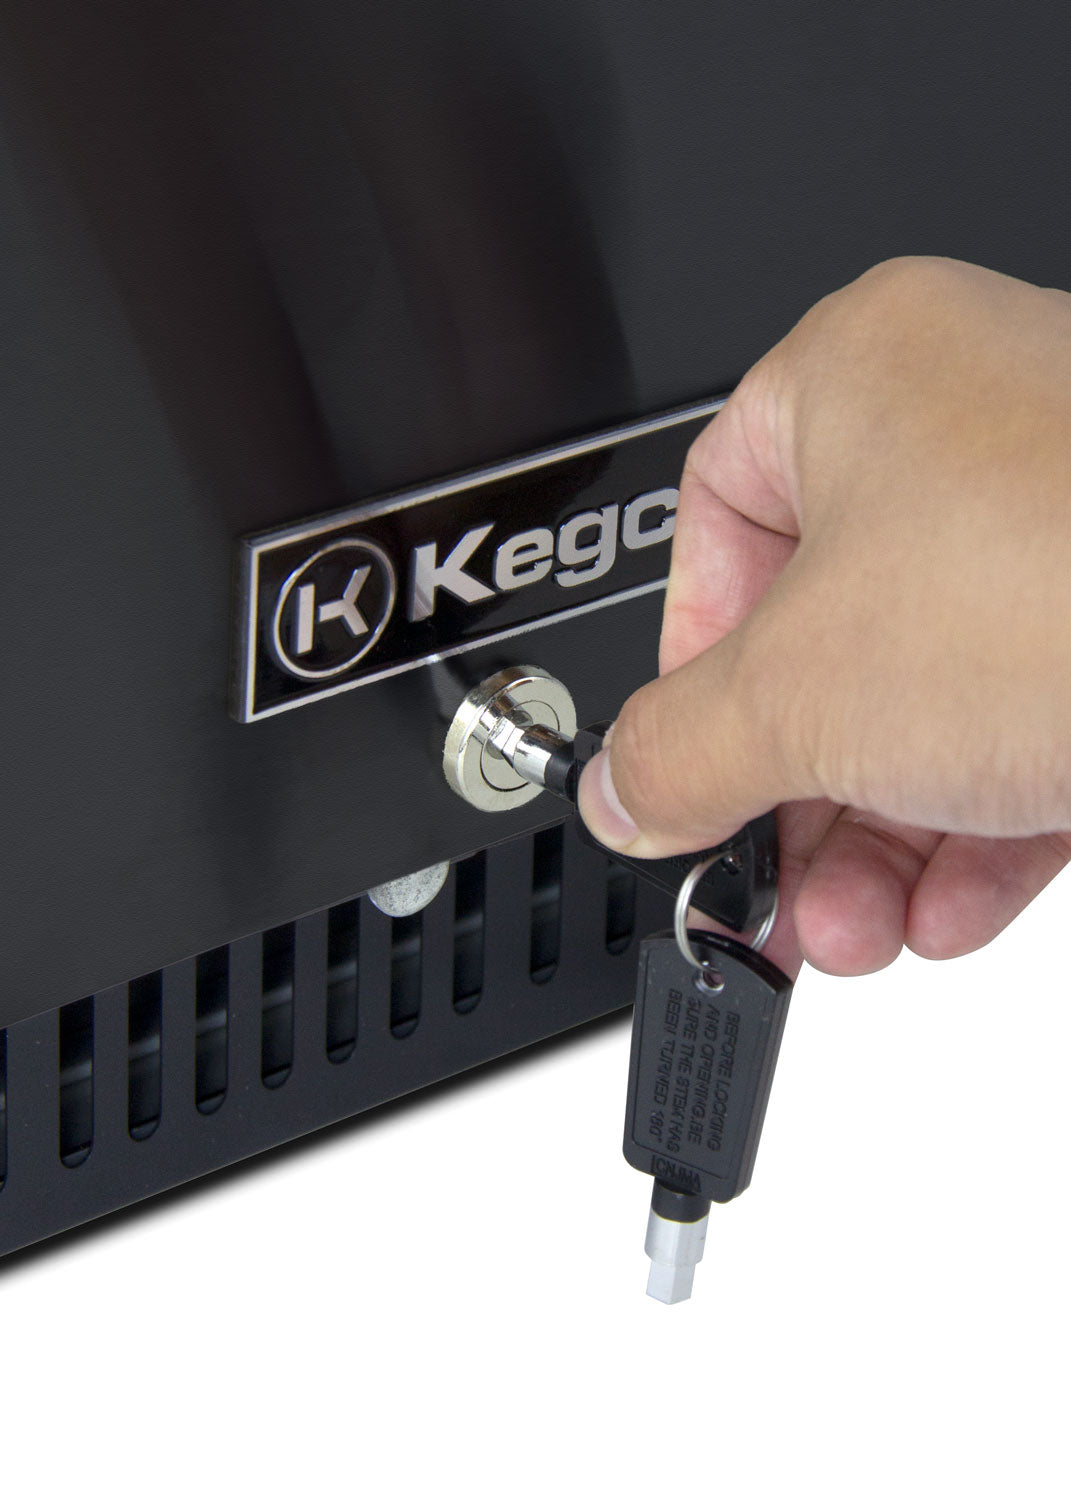 Kegco 15" Wide Single Tap Black Commercial Kegerator